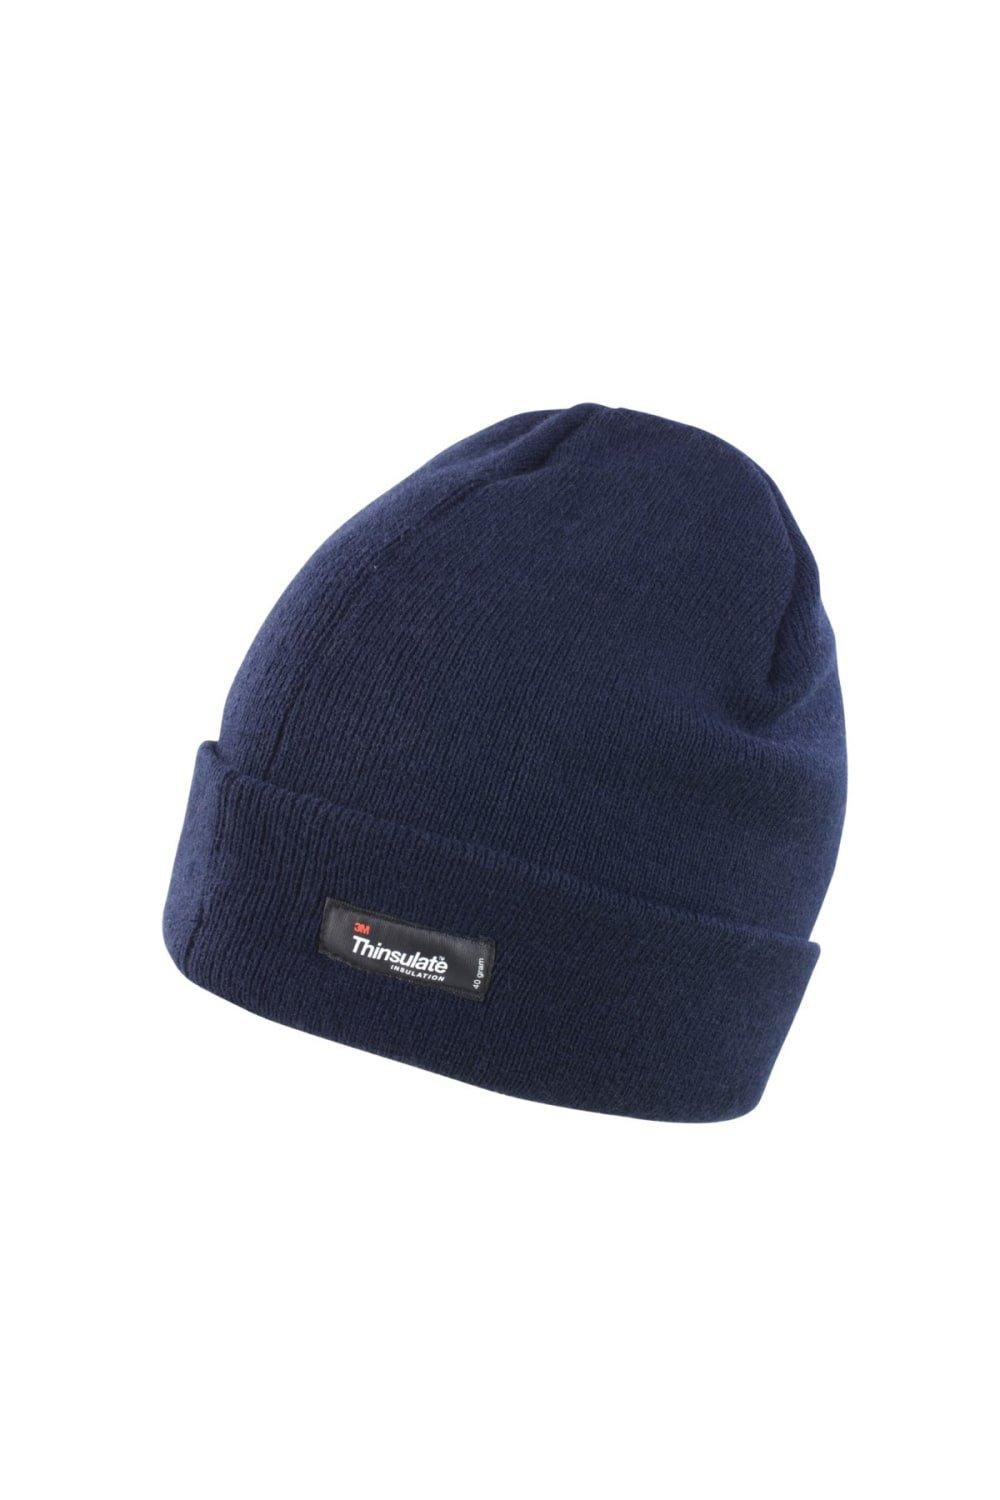 Легкая термозимняя шапка Thinsulate (3M, 40 г) (2 шт. в упаковке) Result, темно-синий фото